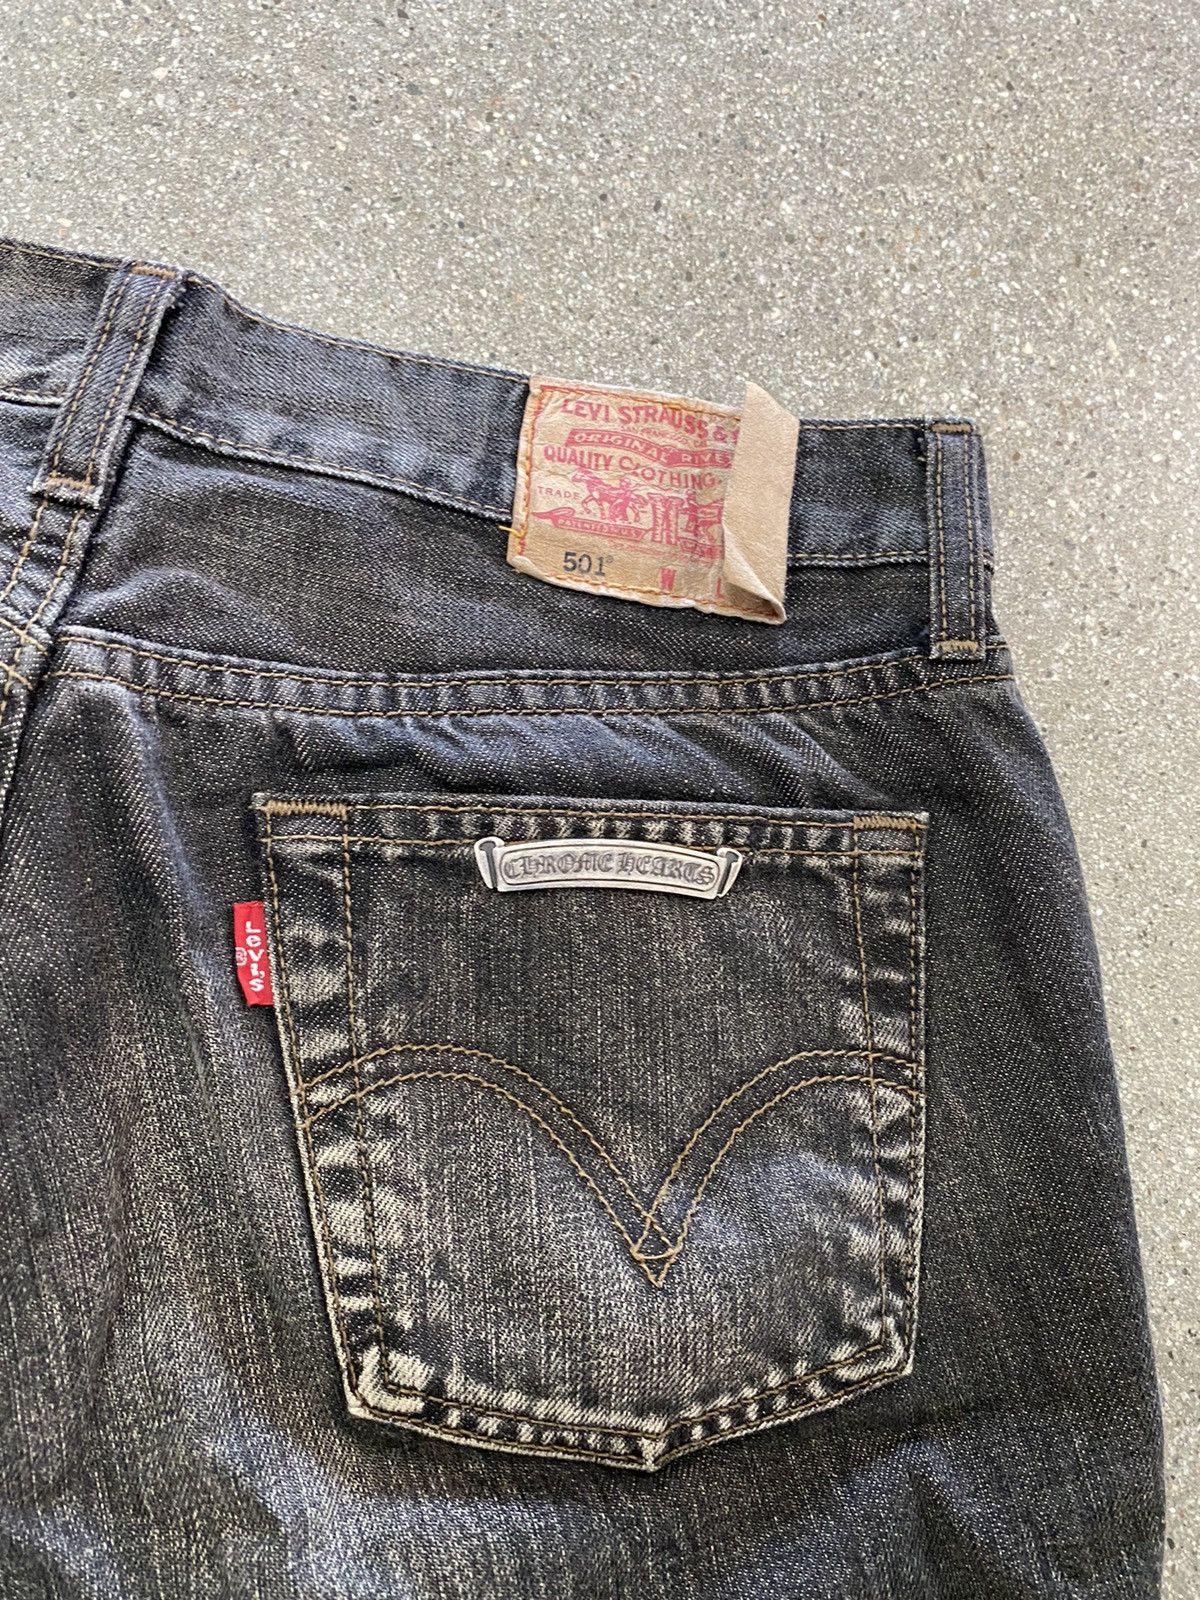 Chrome Hearts Cross Patch Denim Jeans (Special Order) Size US 30 / EU 46 - 6 Thumbnail